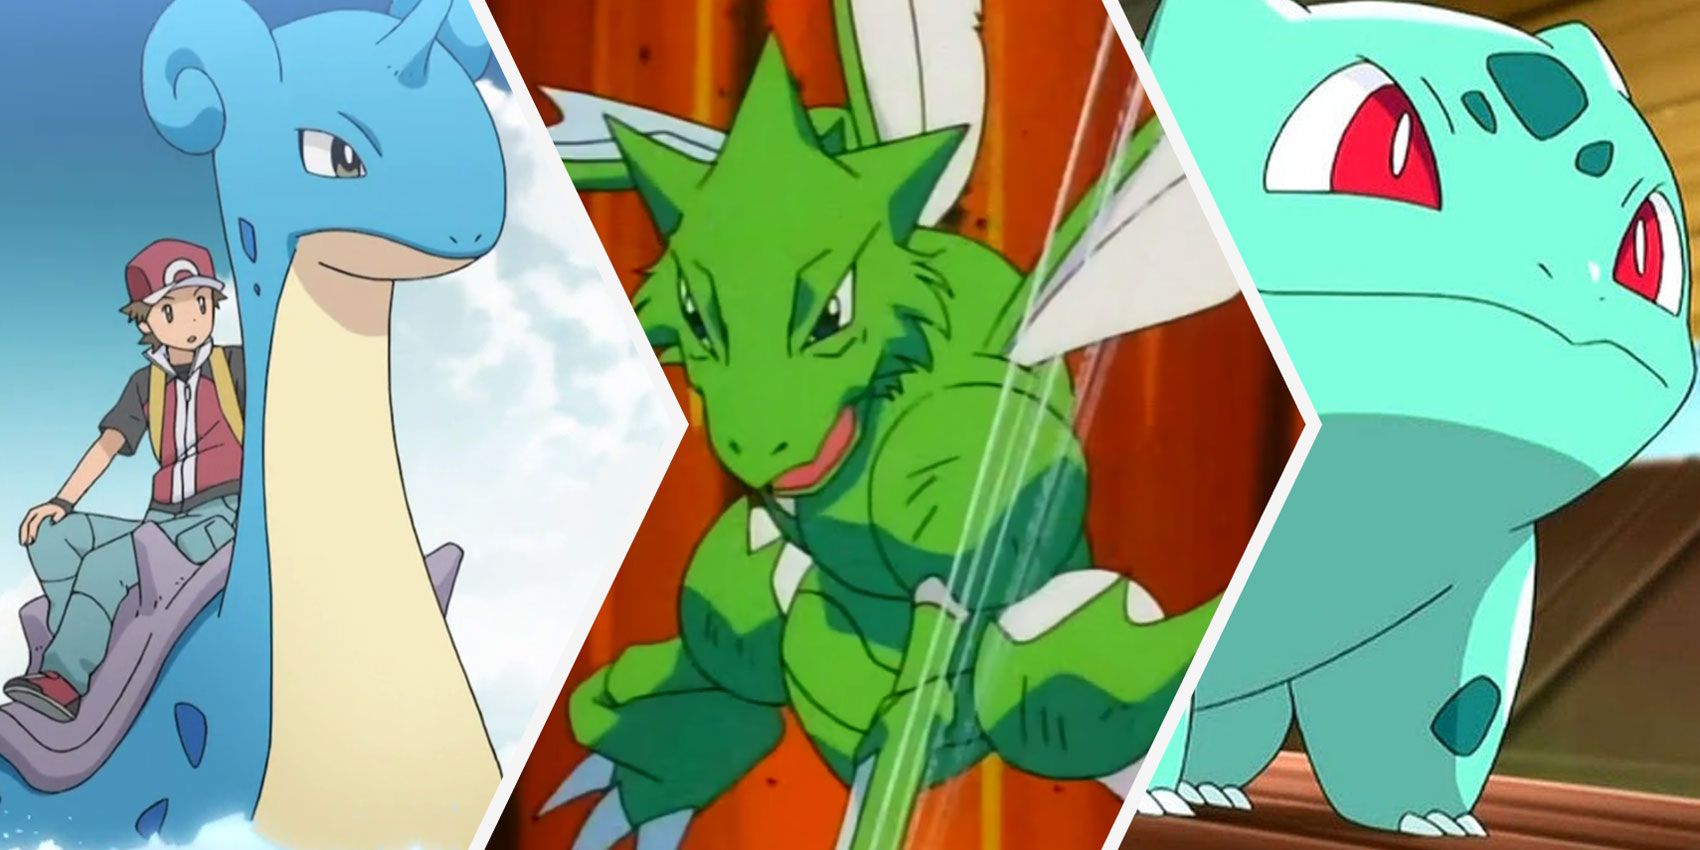 Pokémaniacal — The Top Ten Worst Pokémon Ever #1: Unown